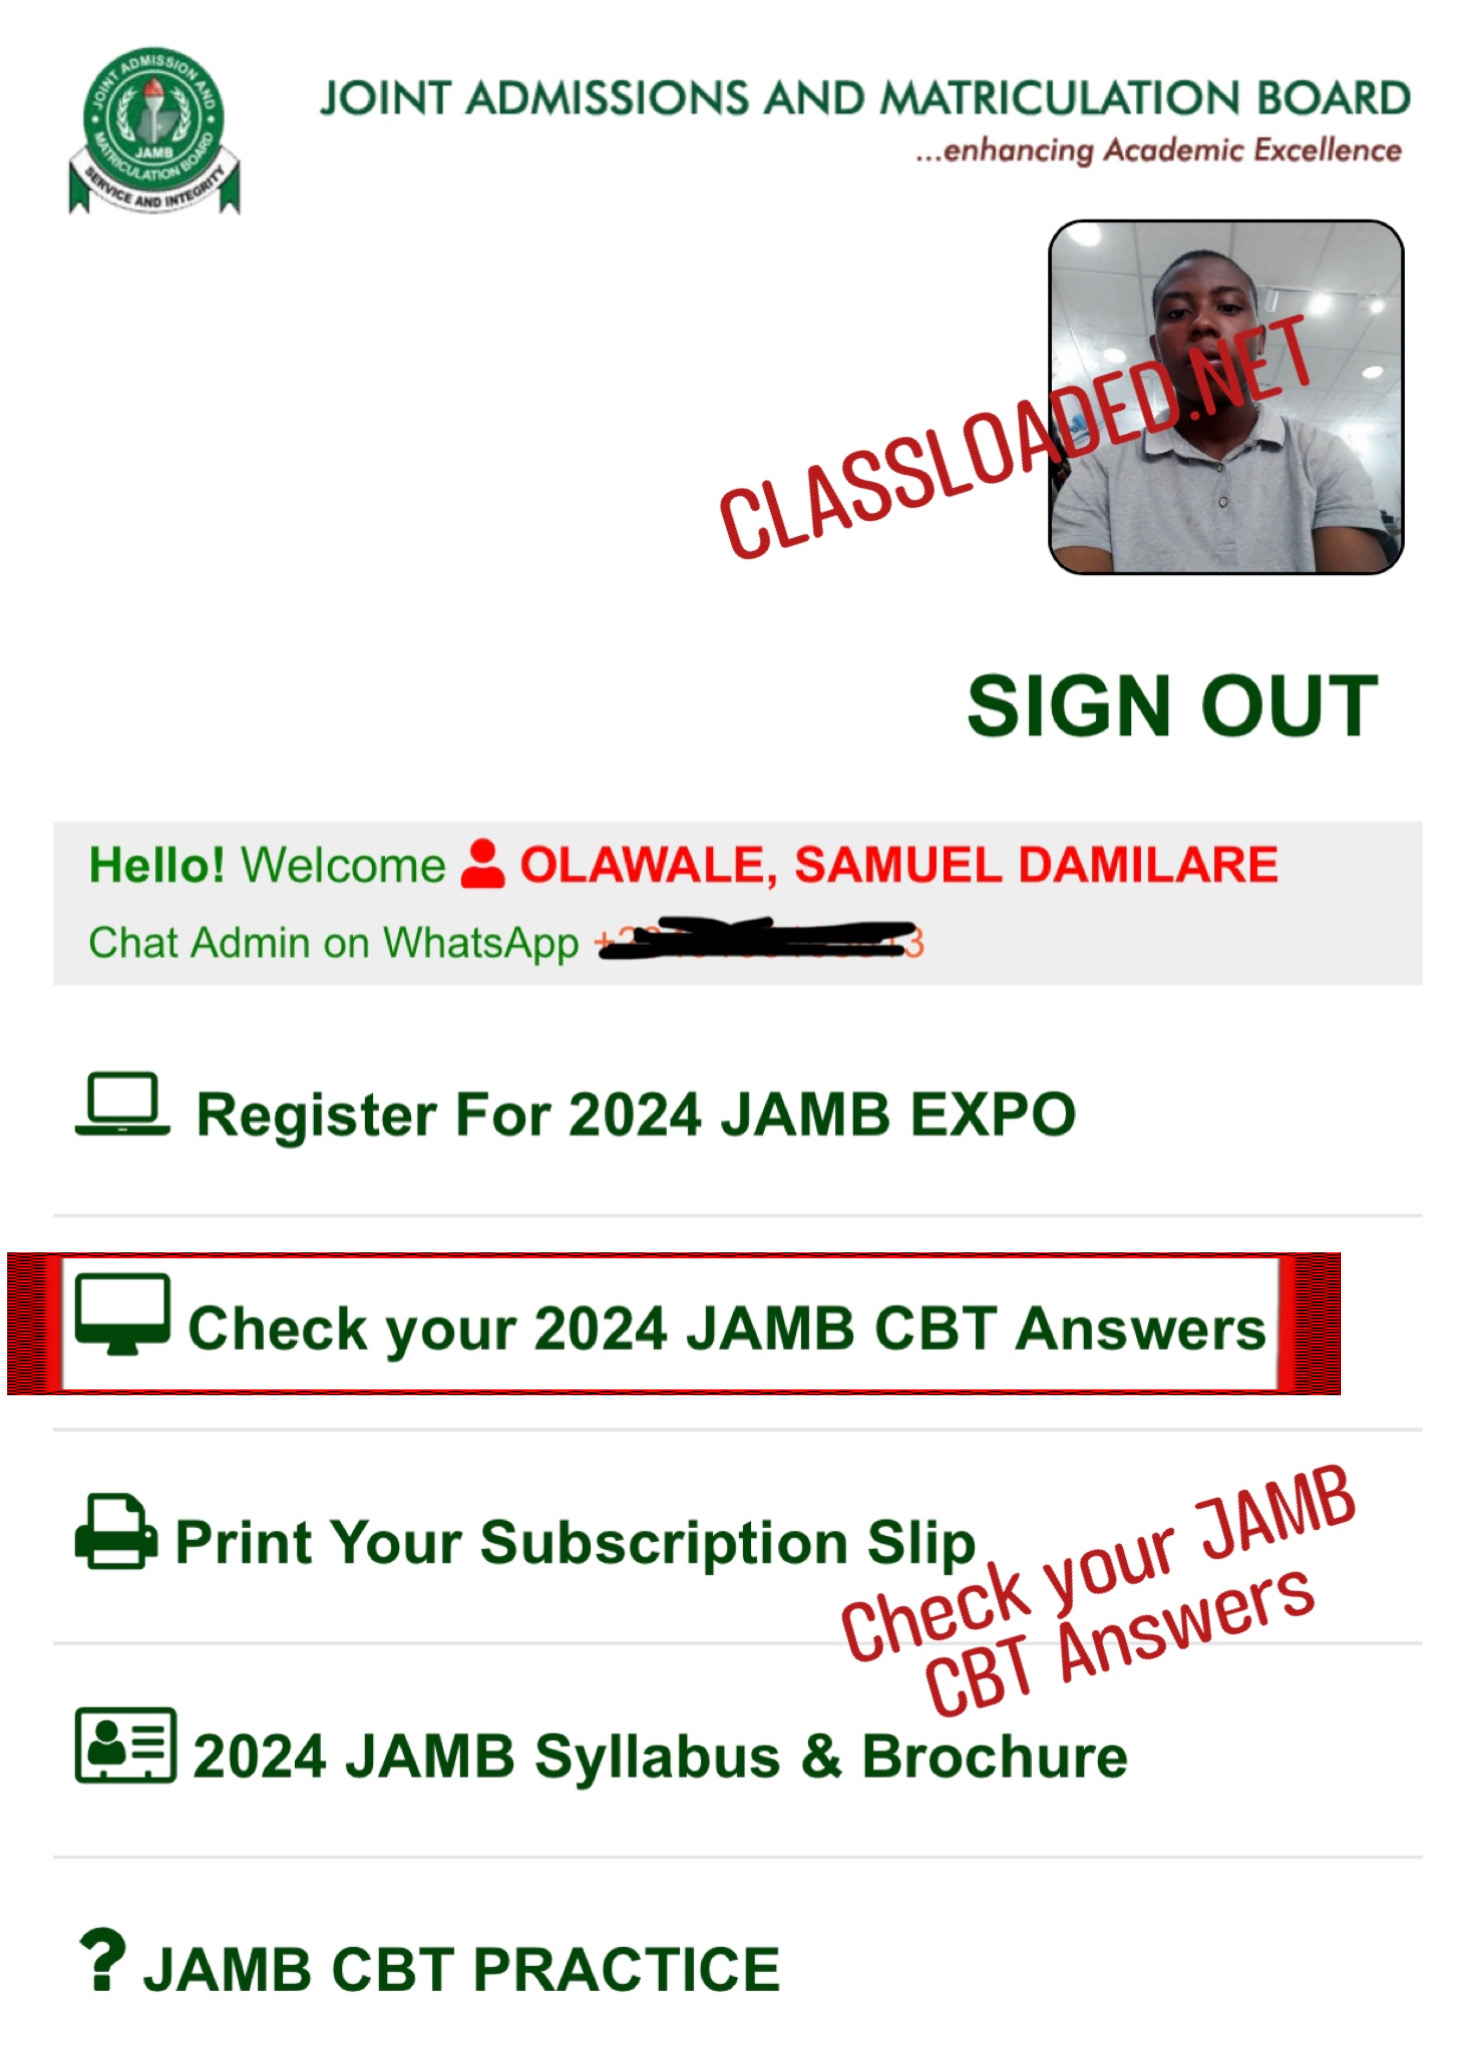 Legit 2024 JAMB Expo | 2024 JAMB Runs | Verified 2024 JAMB Questions & Answers